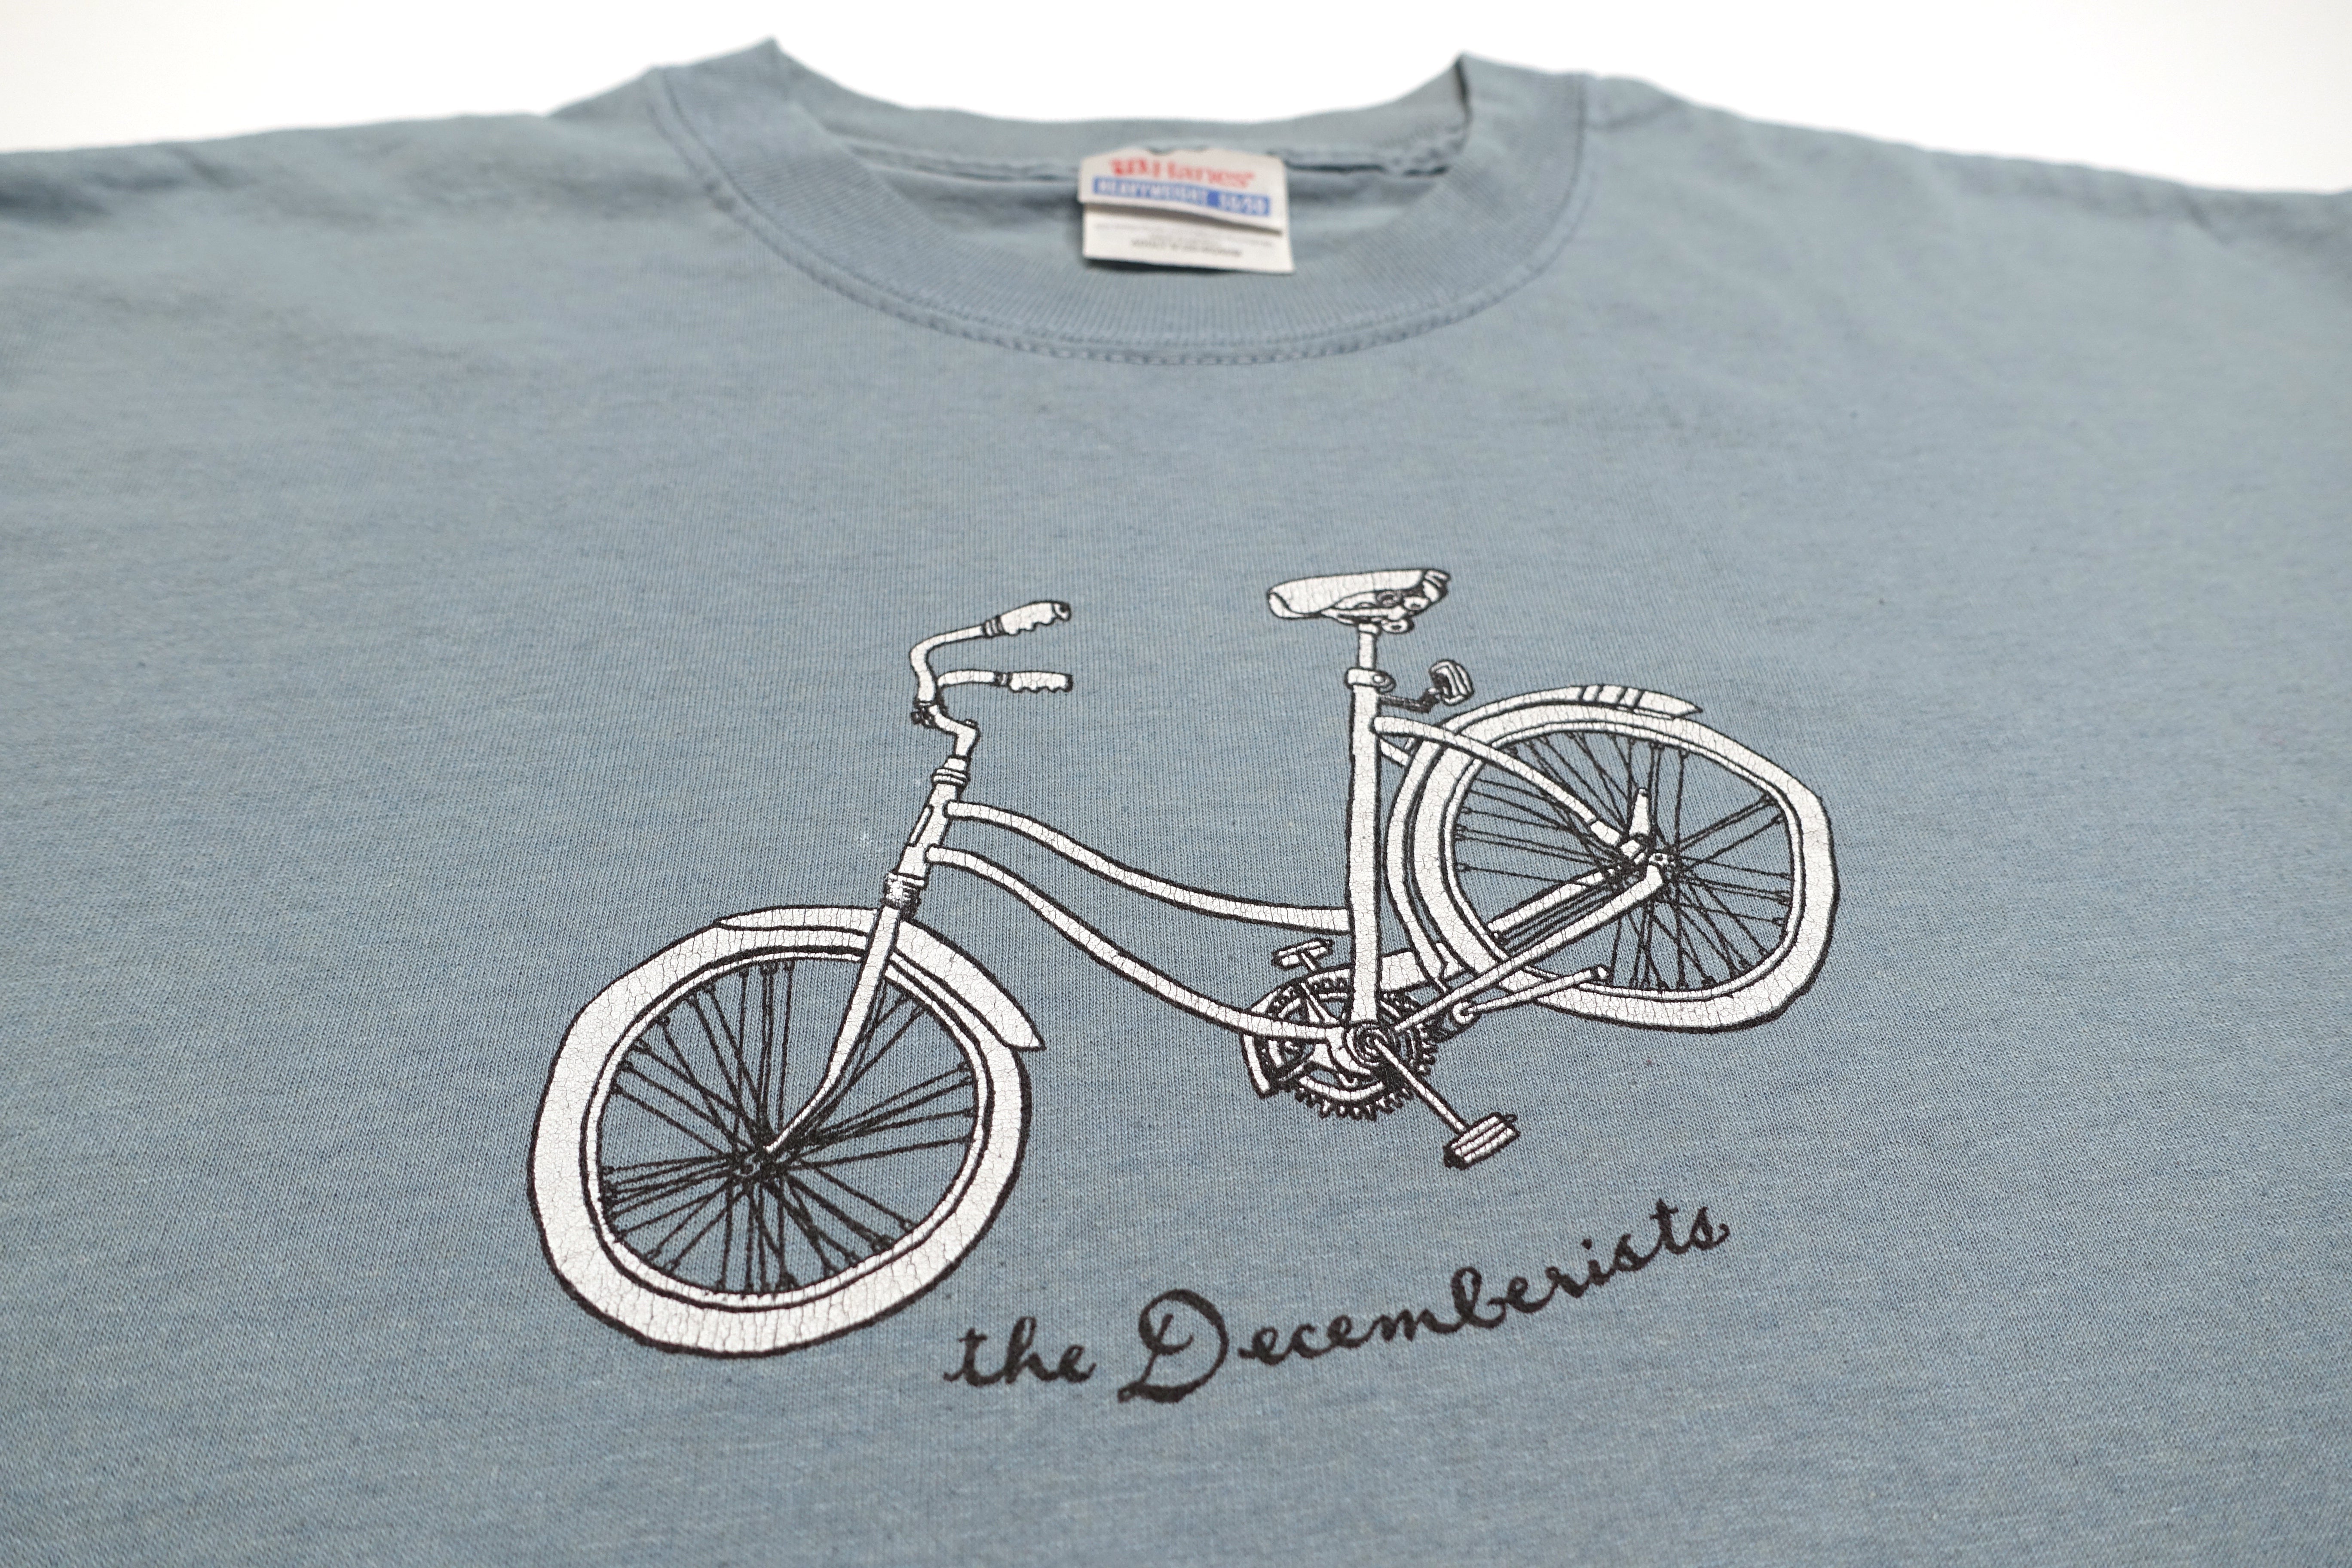 the Decemberists - Picaresque Bicycle 2005 Tour Shirt Size Medium